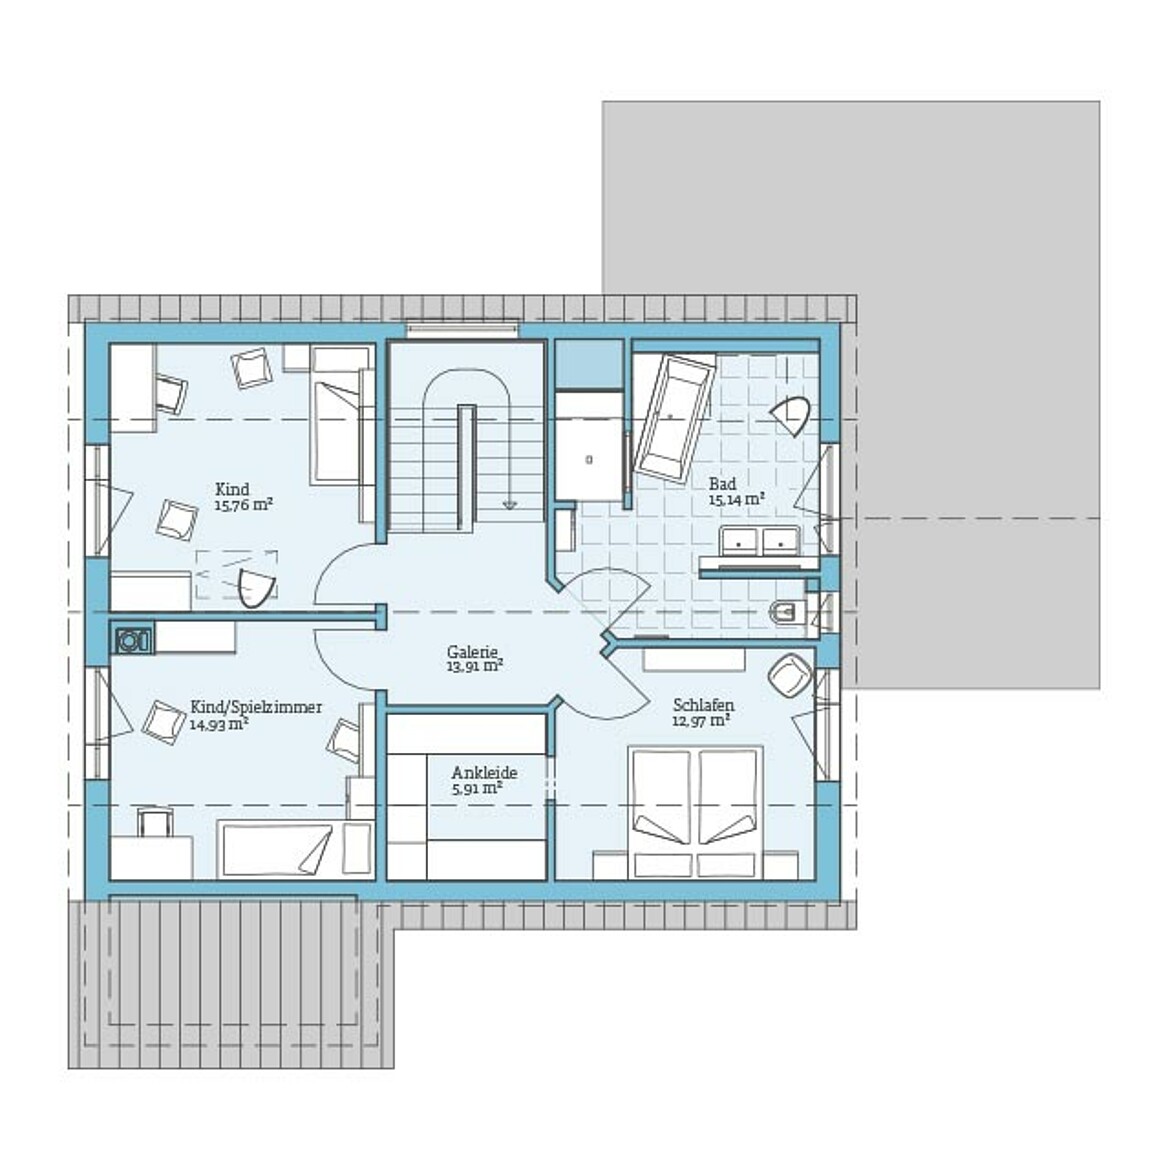 Prefabricated house Variant 35-163: Top floor plan option